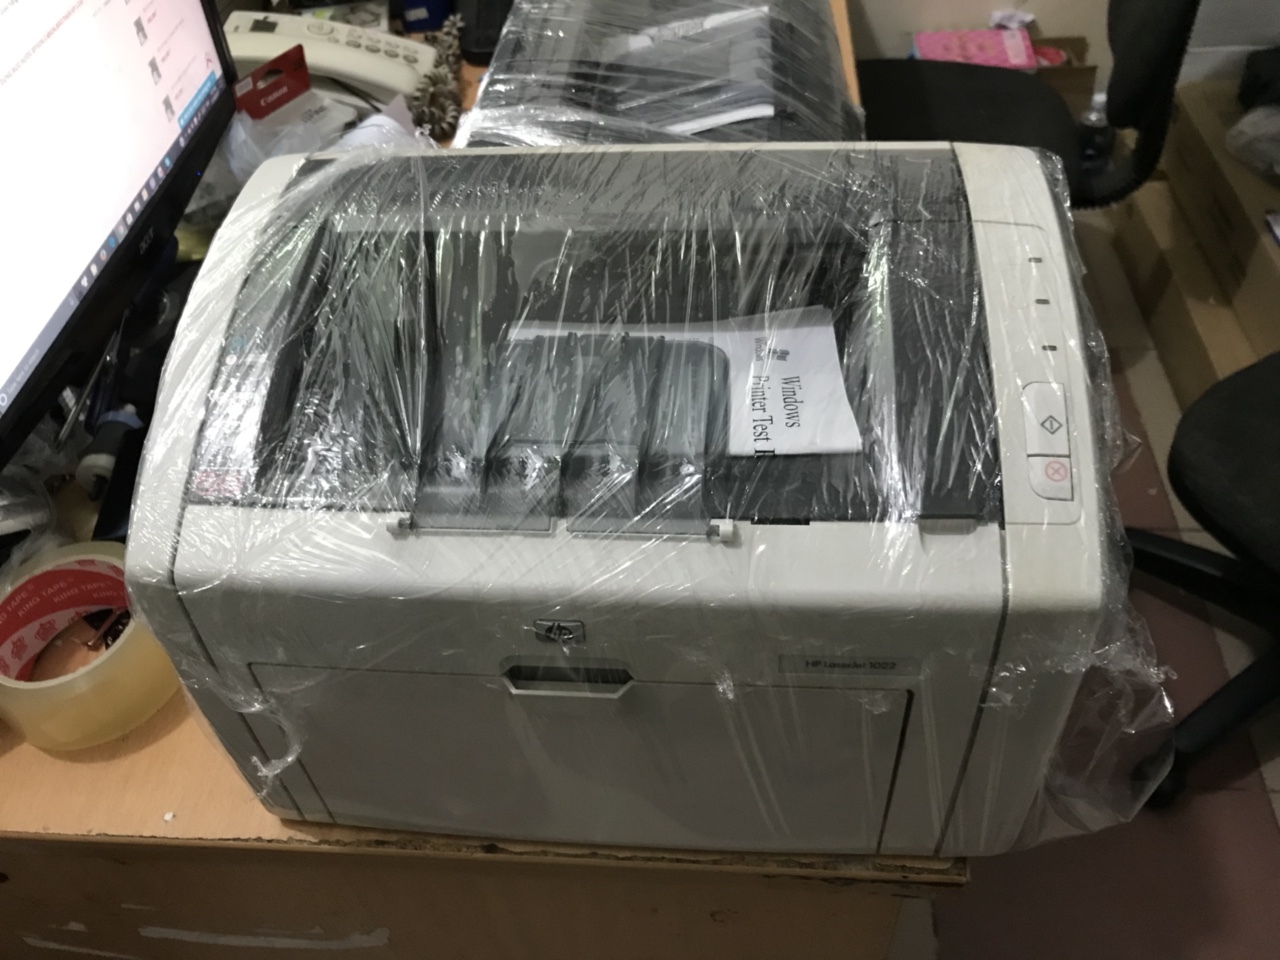 Máy in HP LaserJet 1022 printer (Q5912A)